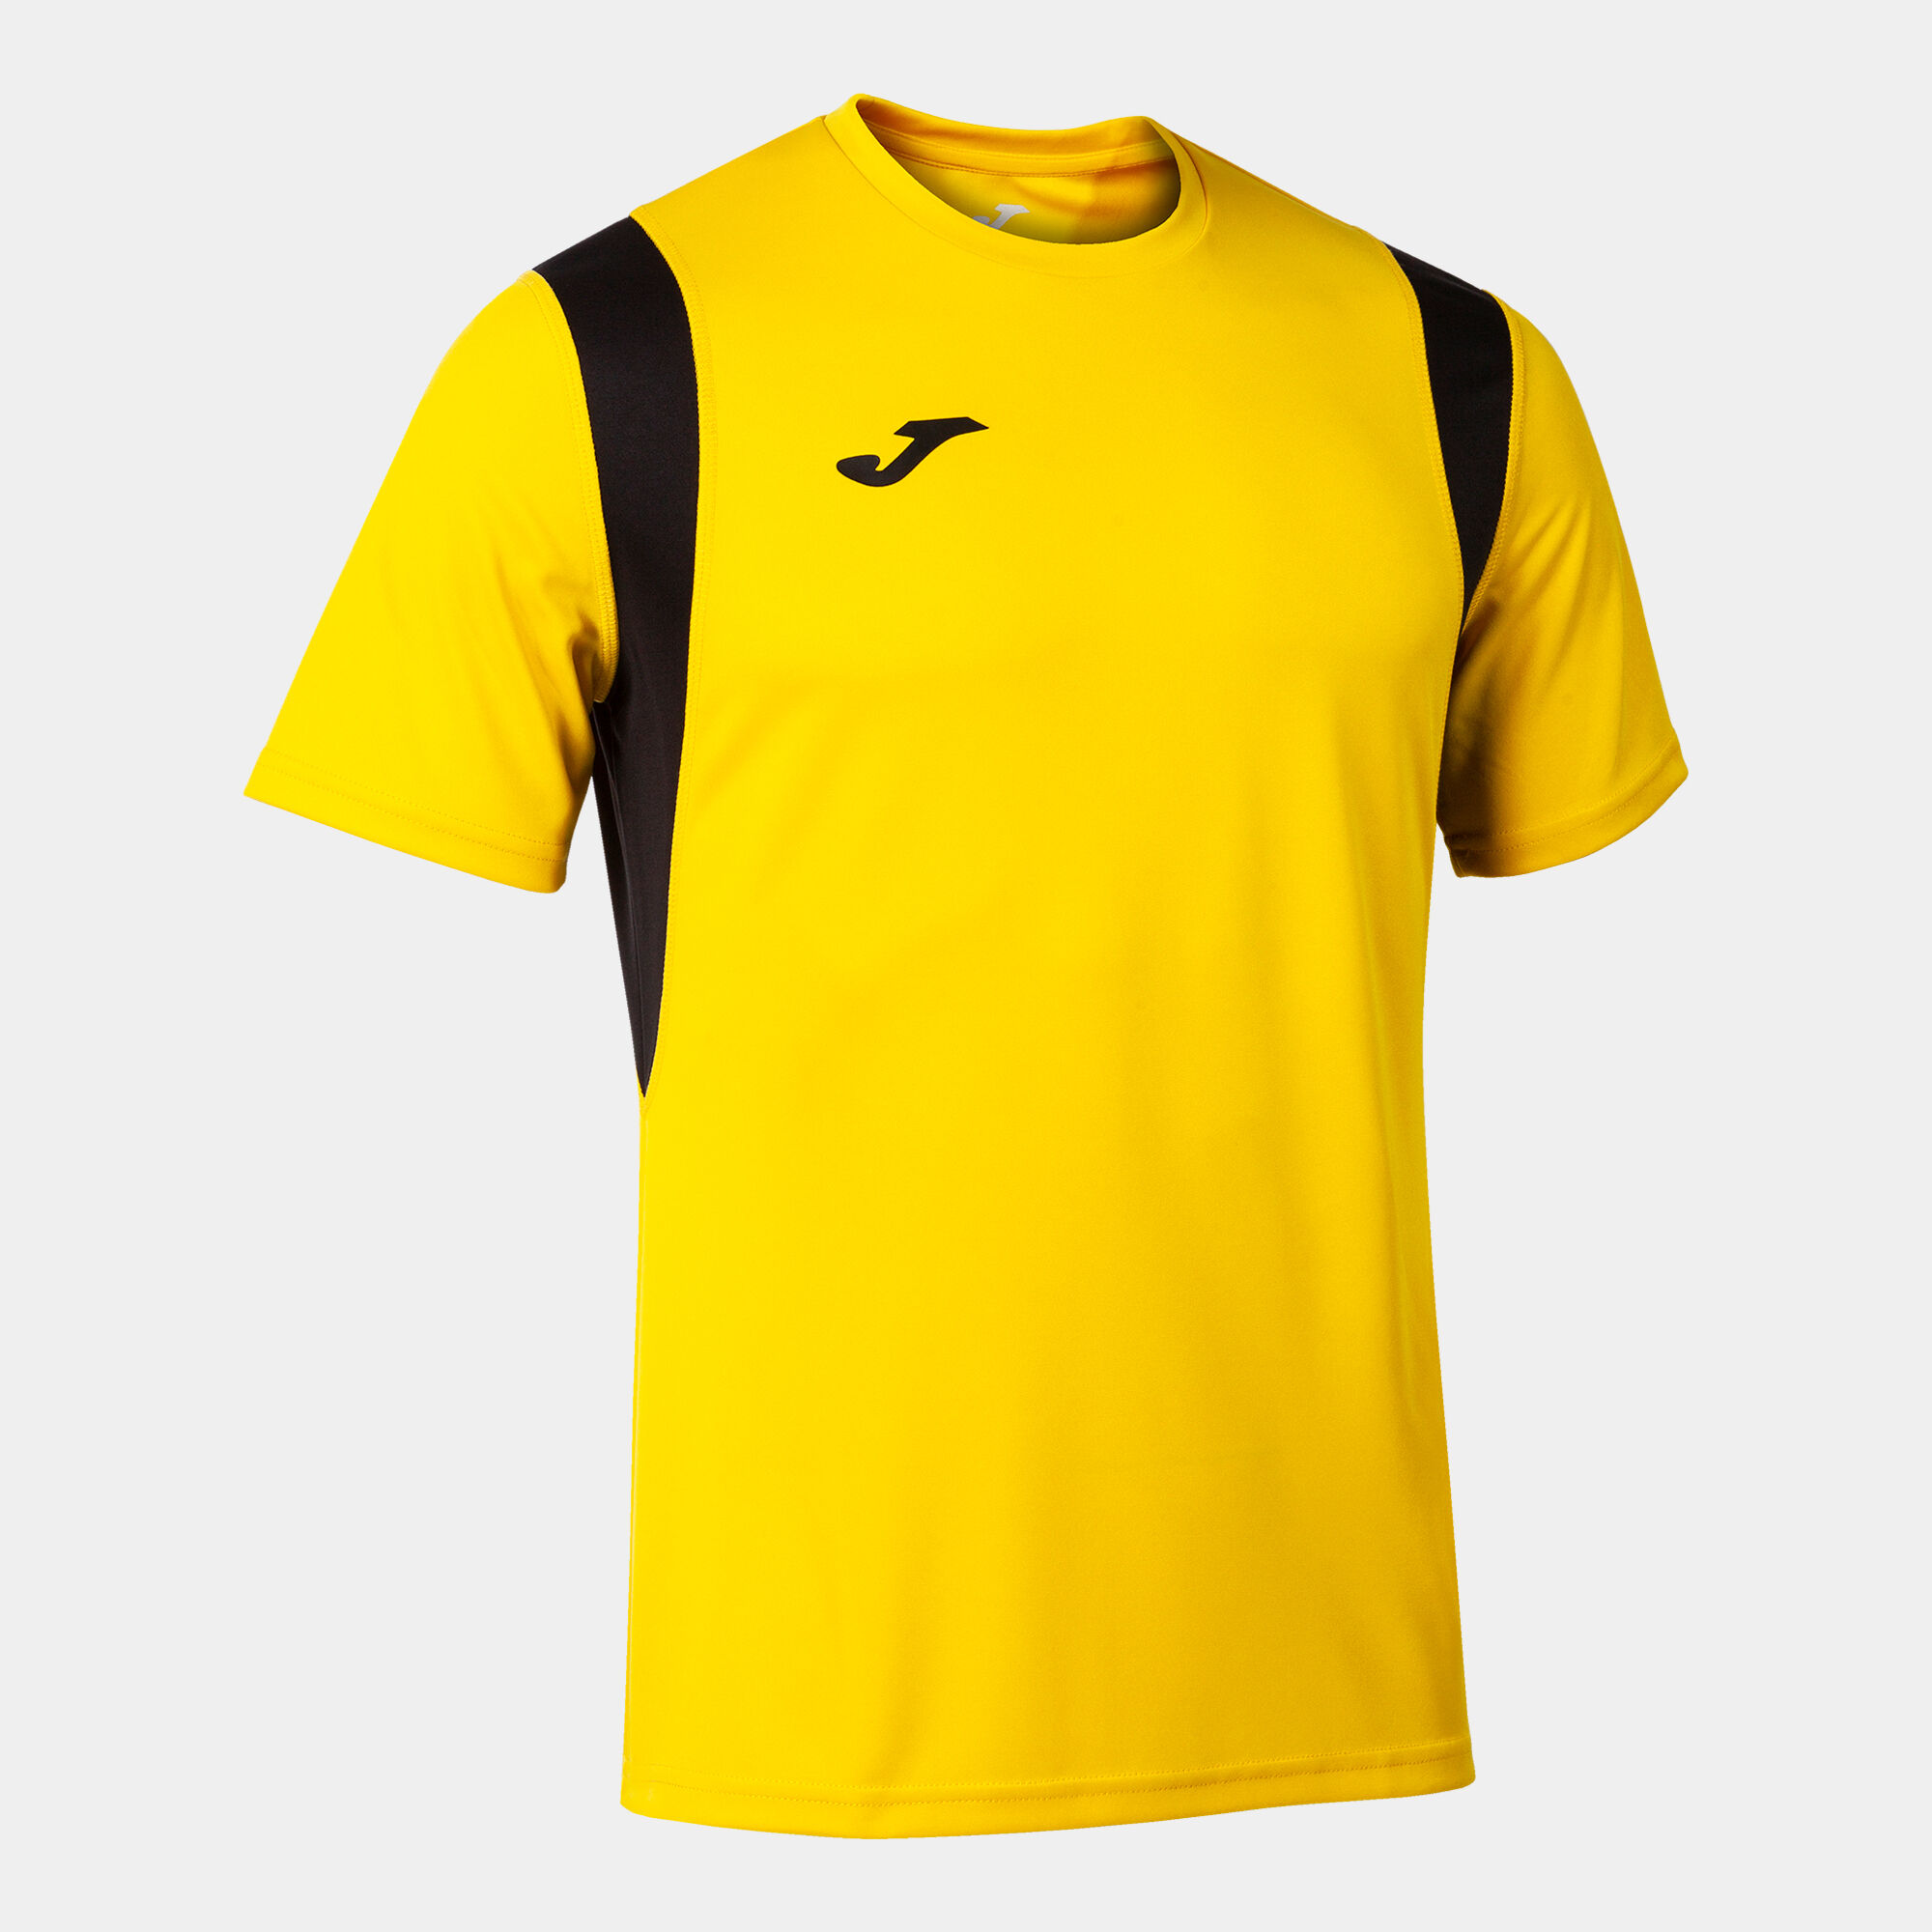 Camiseta manga corta hombre Dinamo amarillo